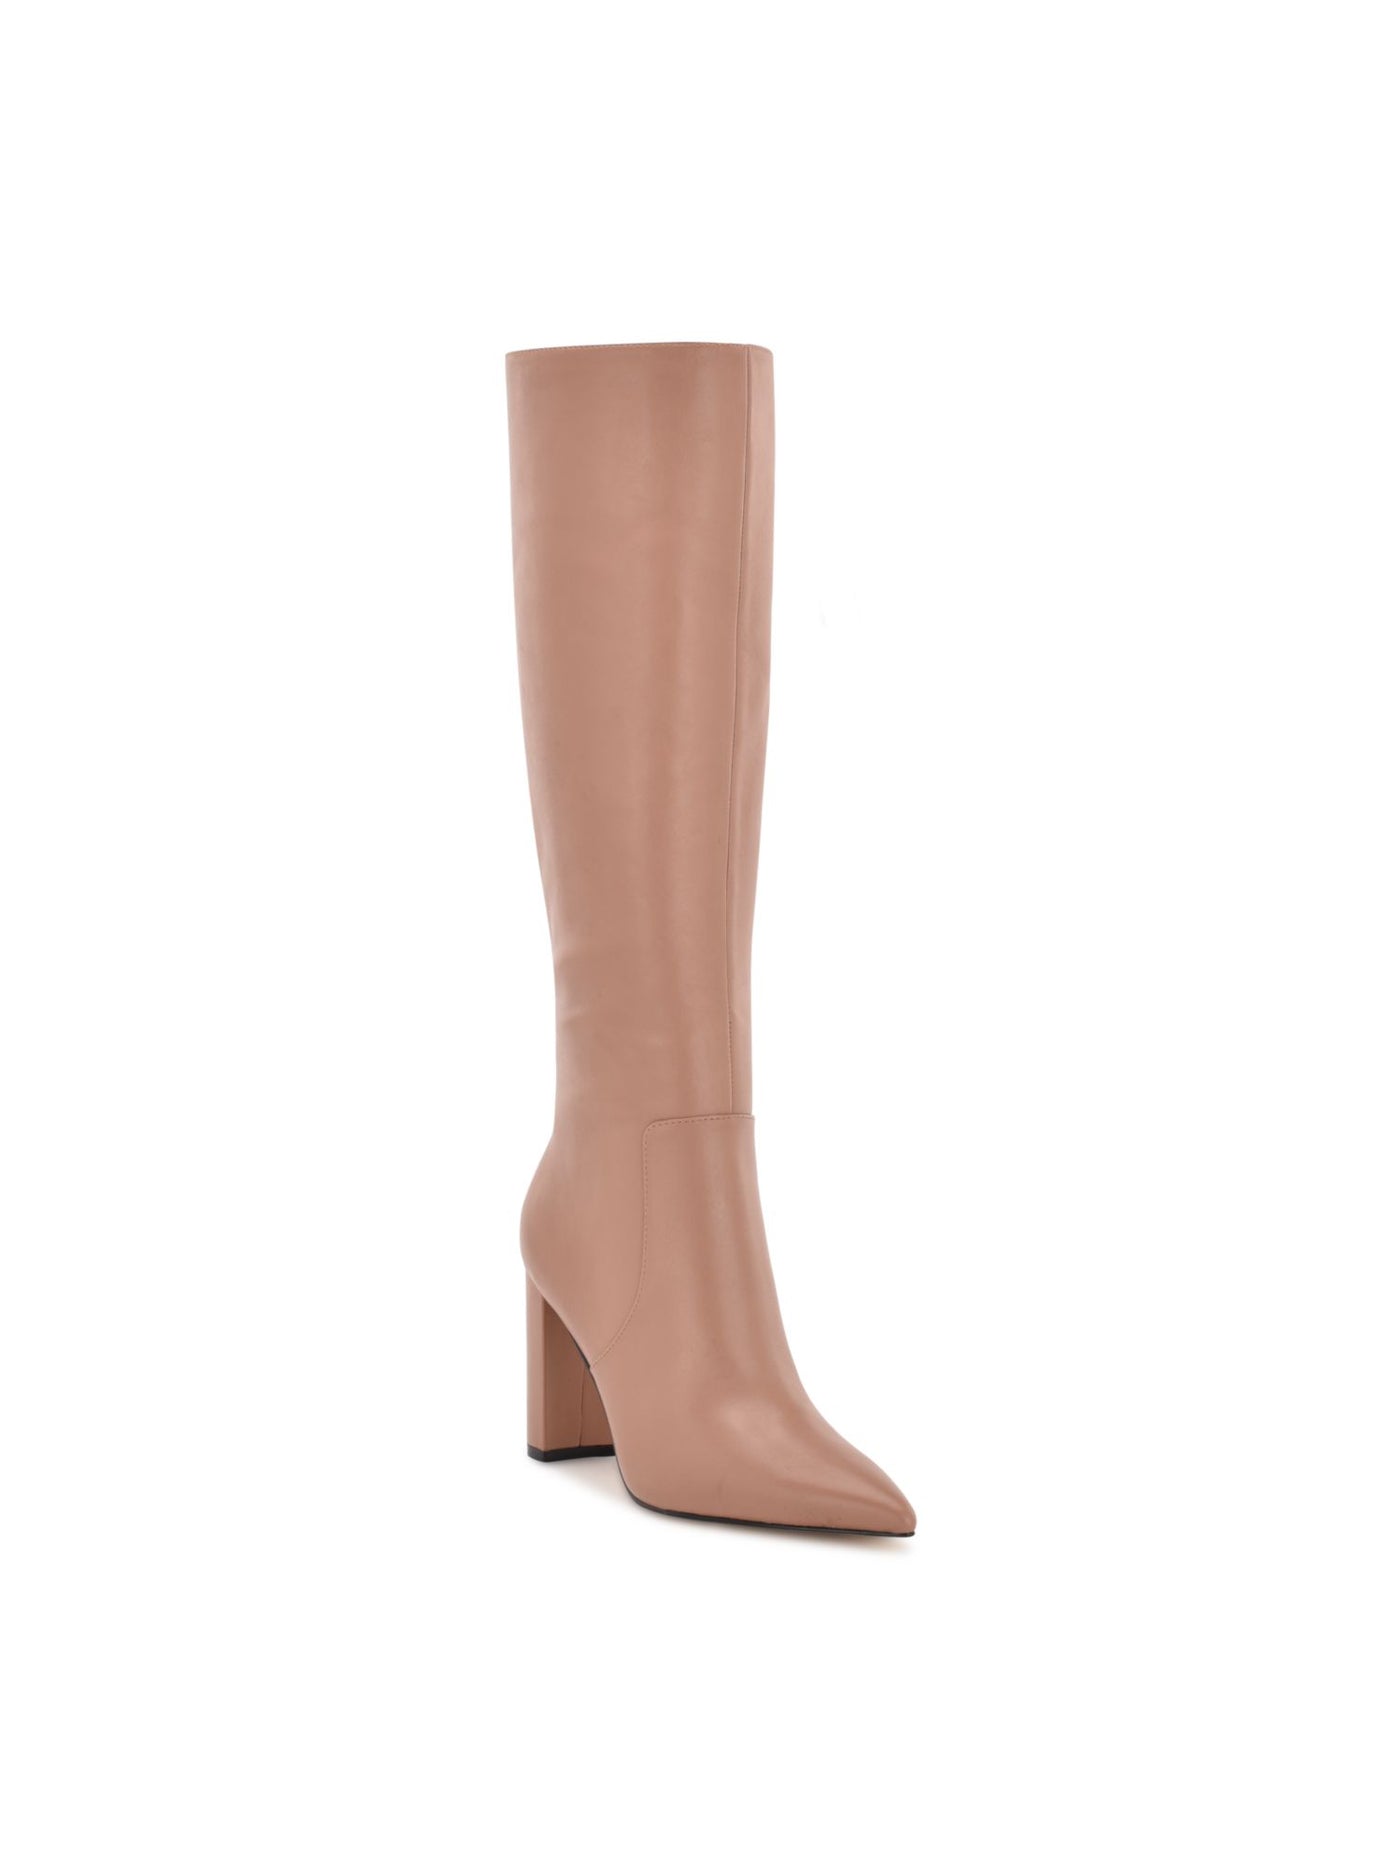 NINE WEST Womens Beige Padded Goring Danee Pointed Toe Block Heel Zip-Up Leather Dress Boots 6.5 M